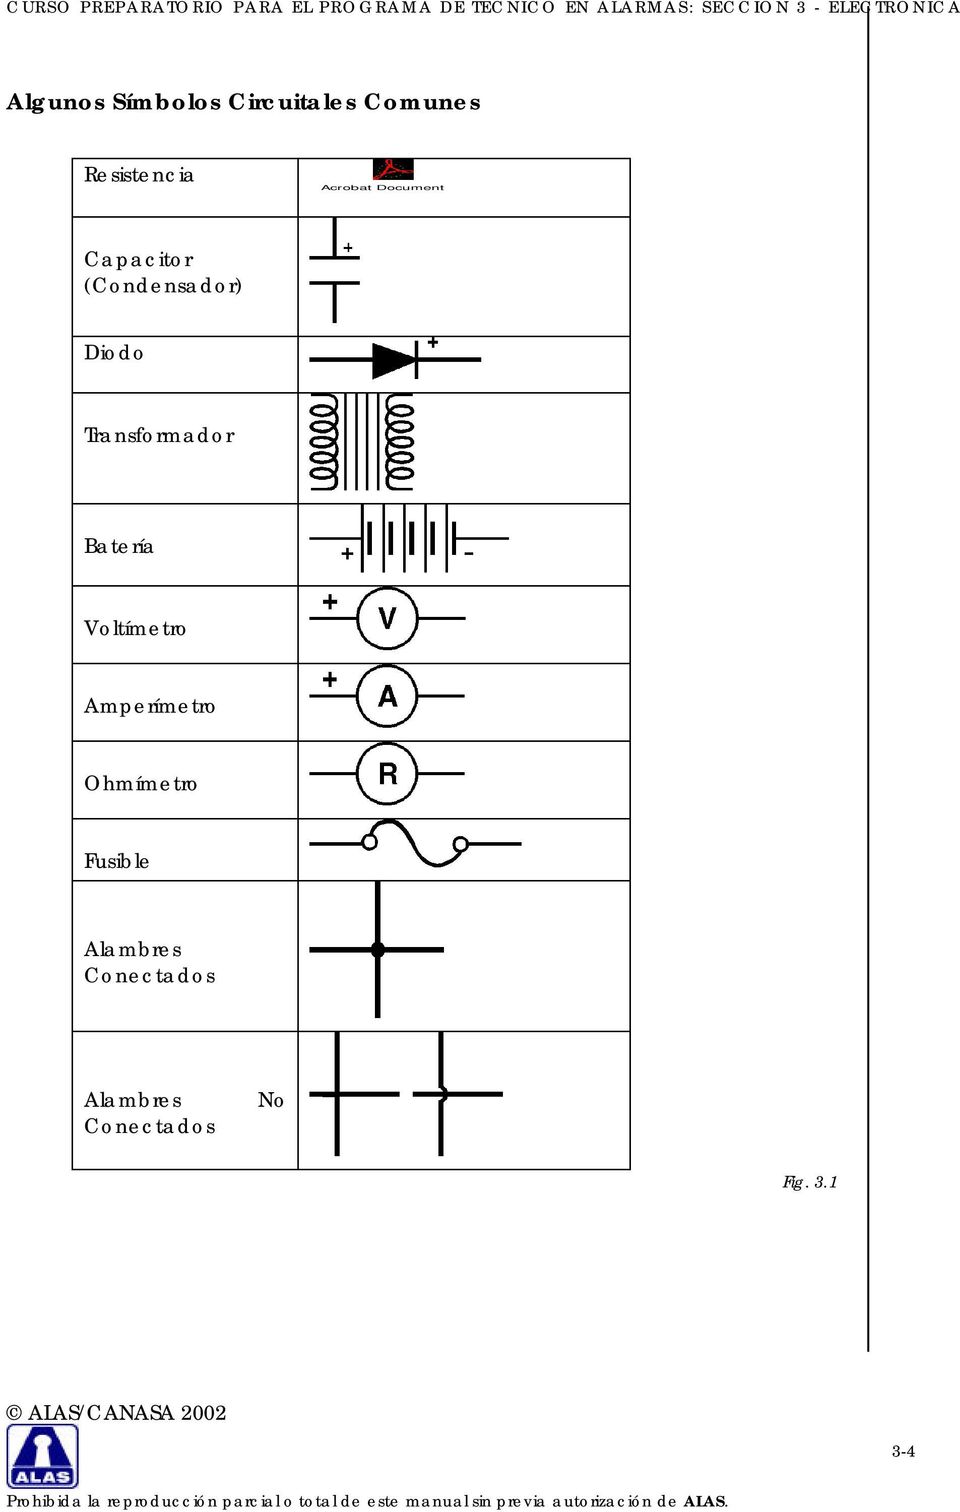 Document Capacitor (Condensador) Diodo Transformador Batería Voltímetro